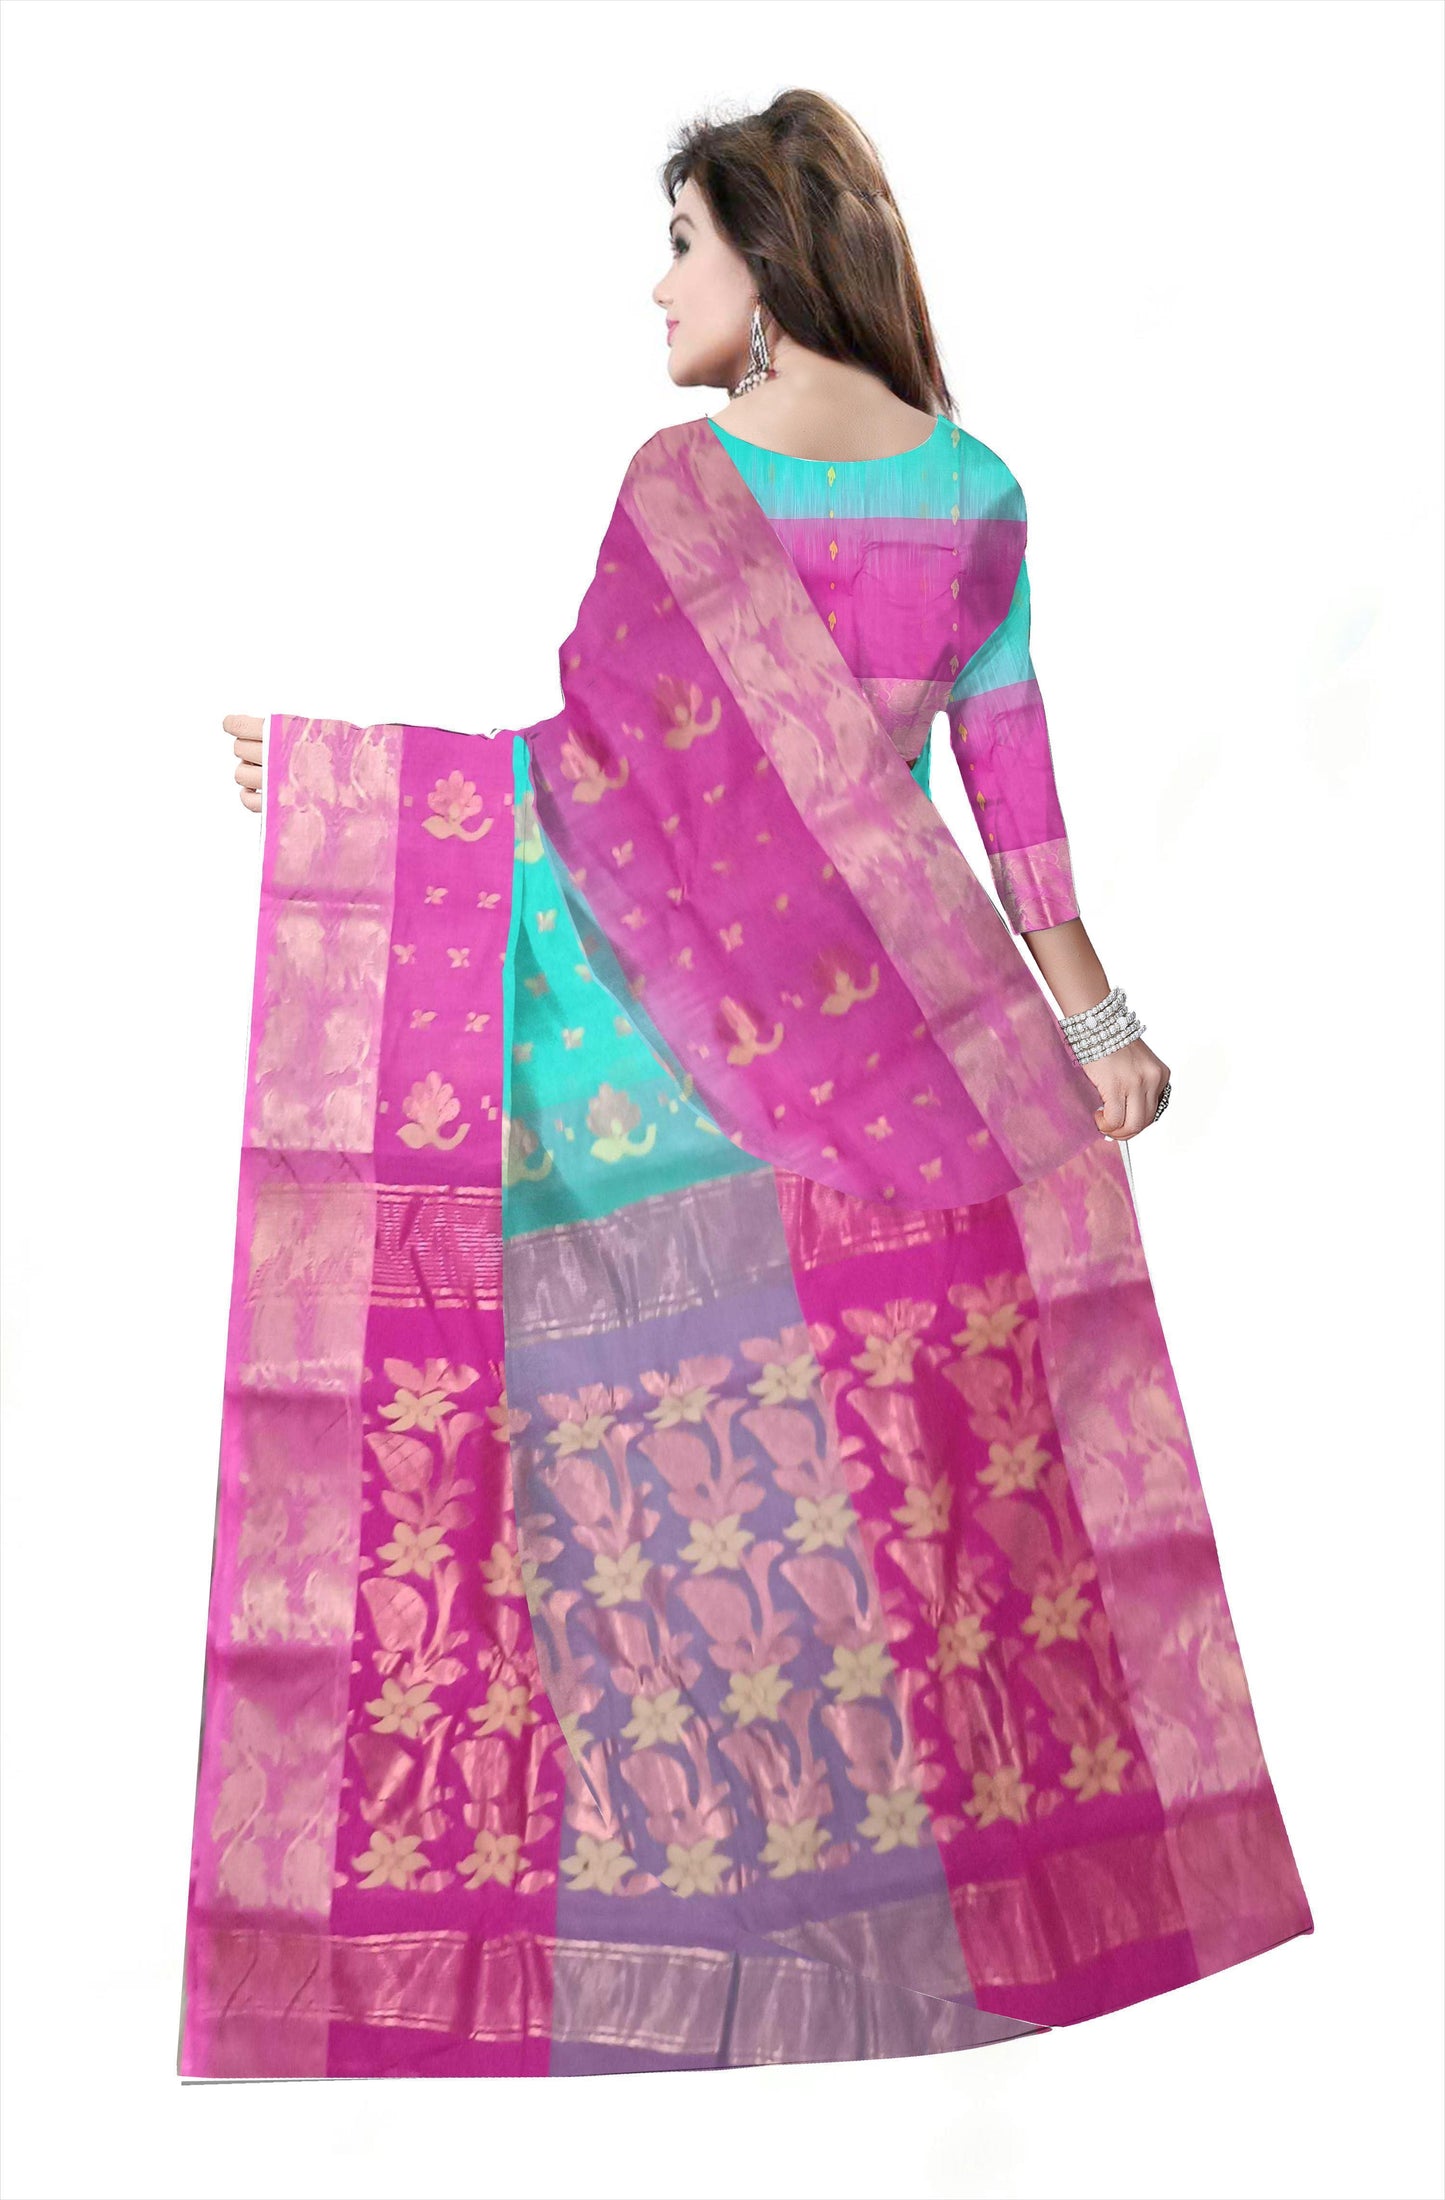 Pradip Fabrics Ethnic Women's Cotton Tant cotton Sea Green & pink Color Saree